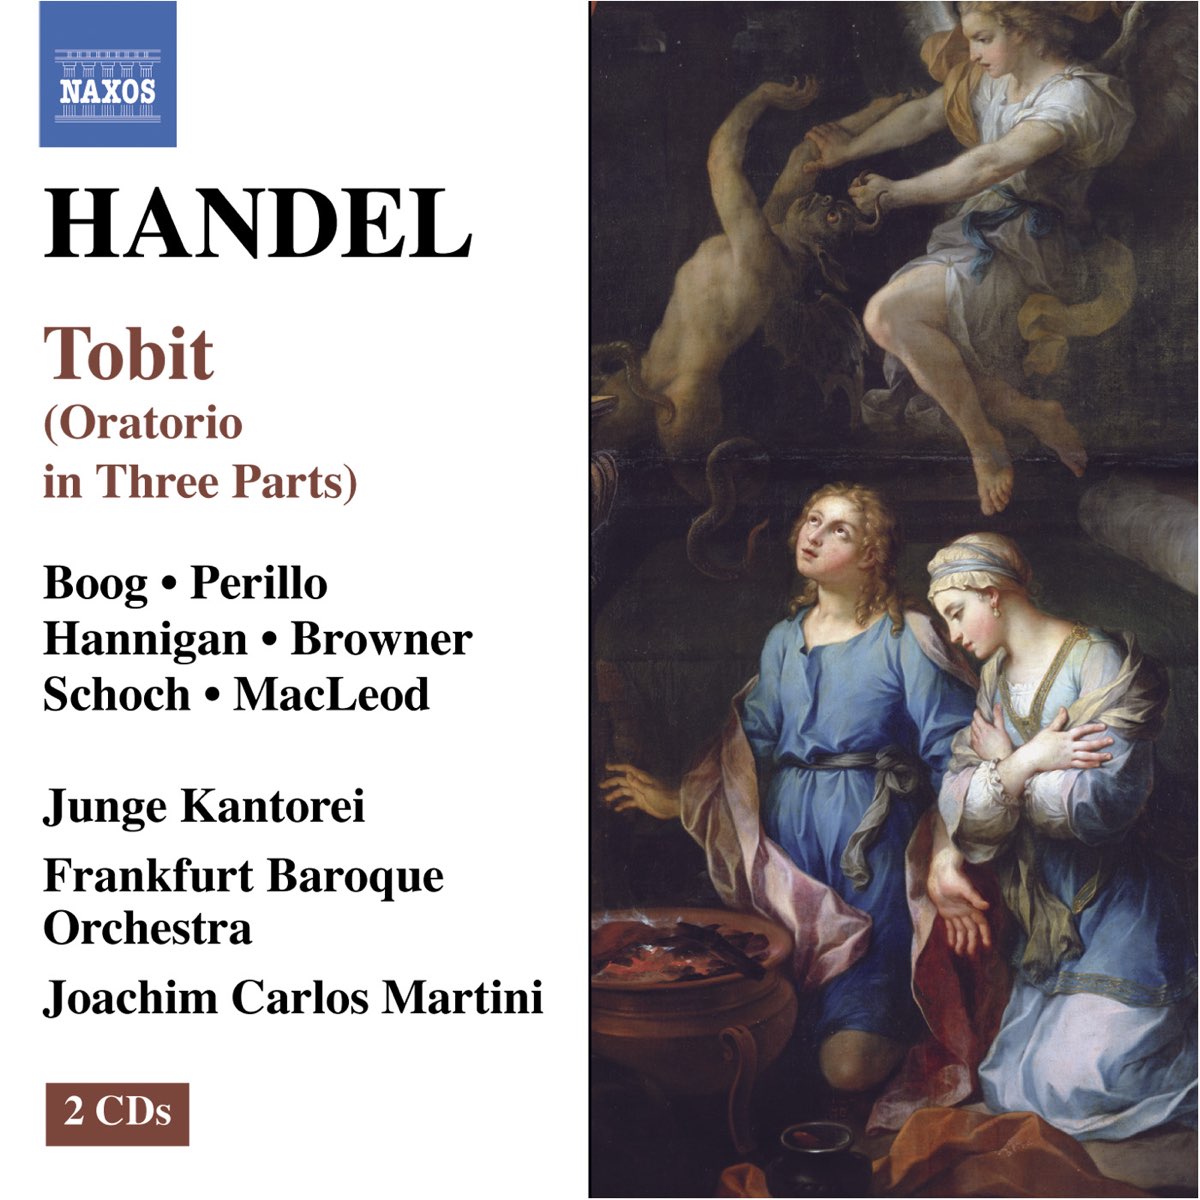 Frankfurt Baroque Orchestra Joachim Carlos Martini Junge Kantoreiの Handel Tobit をapple Musicで